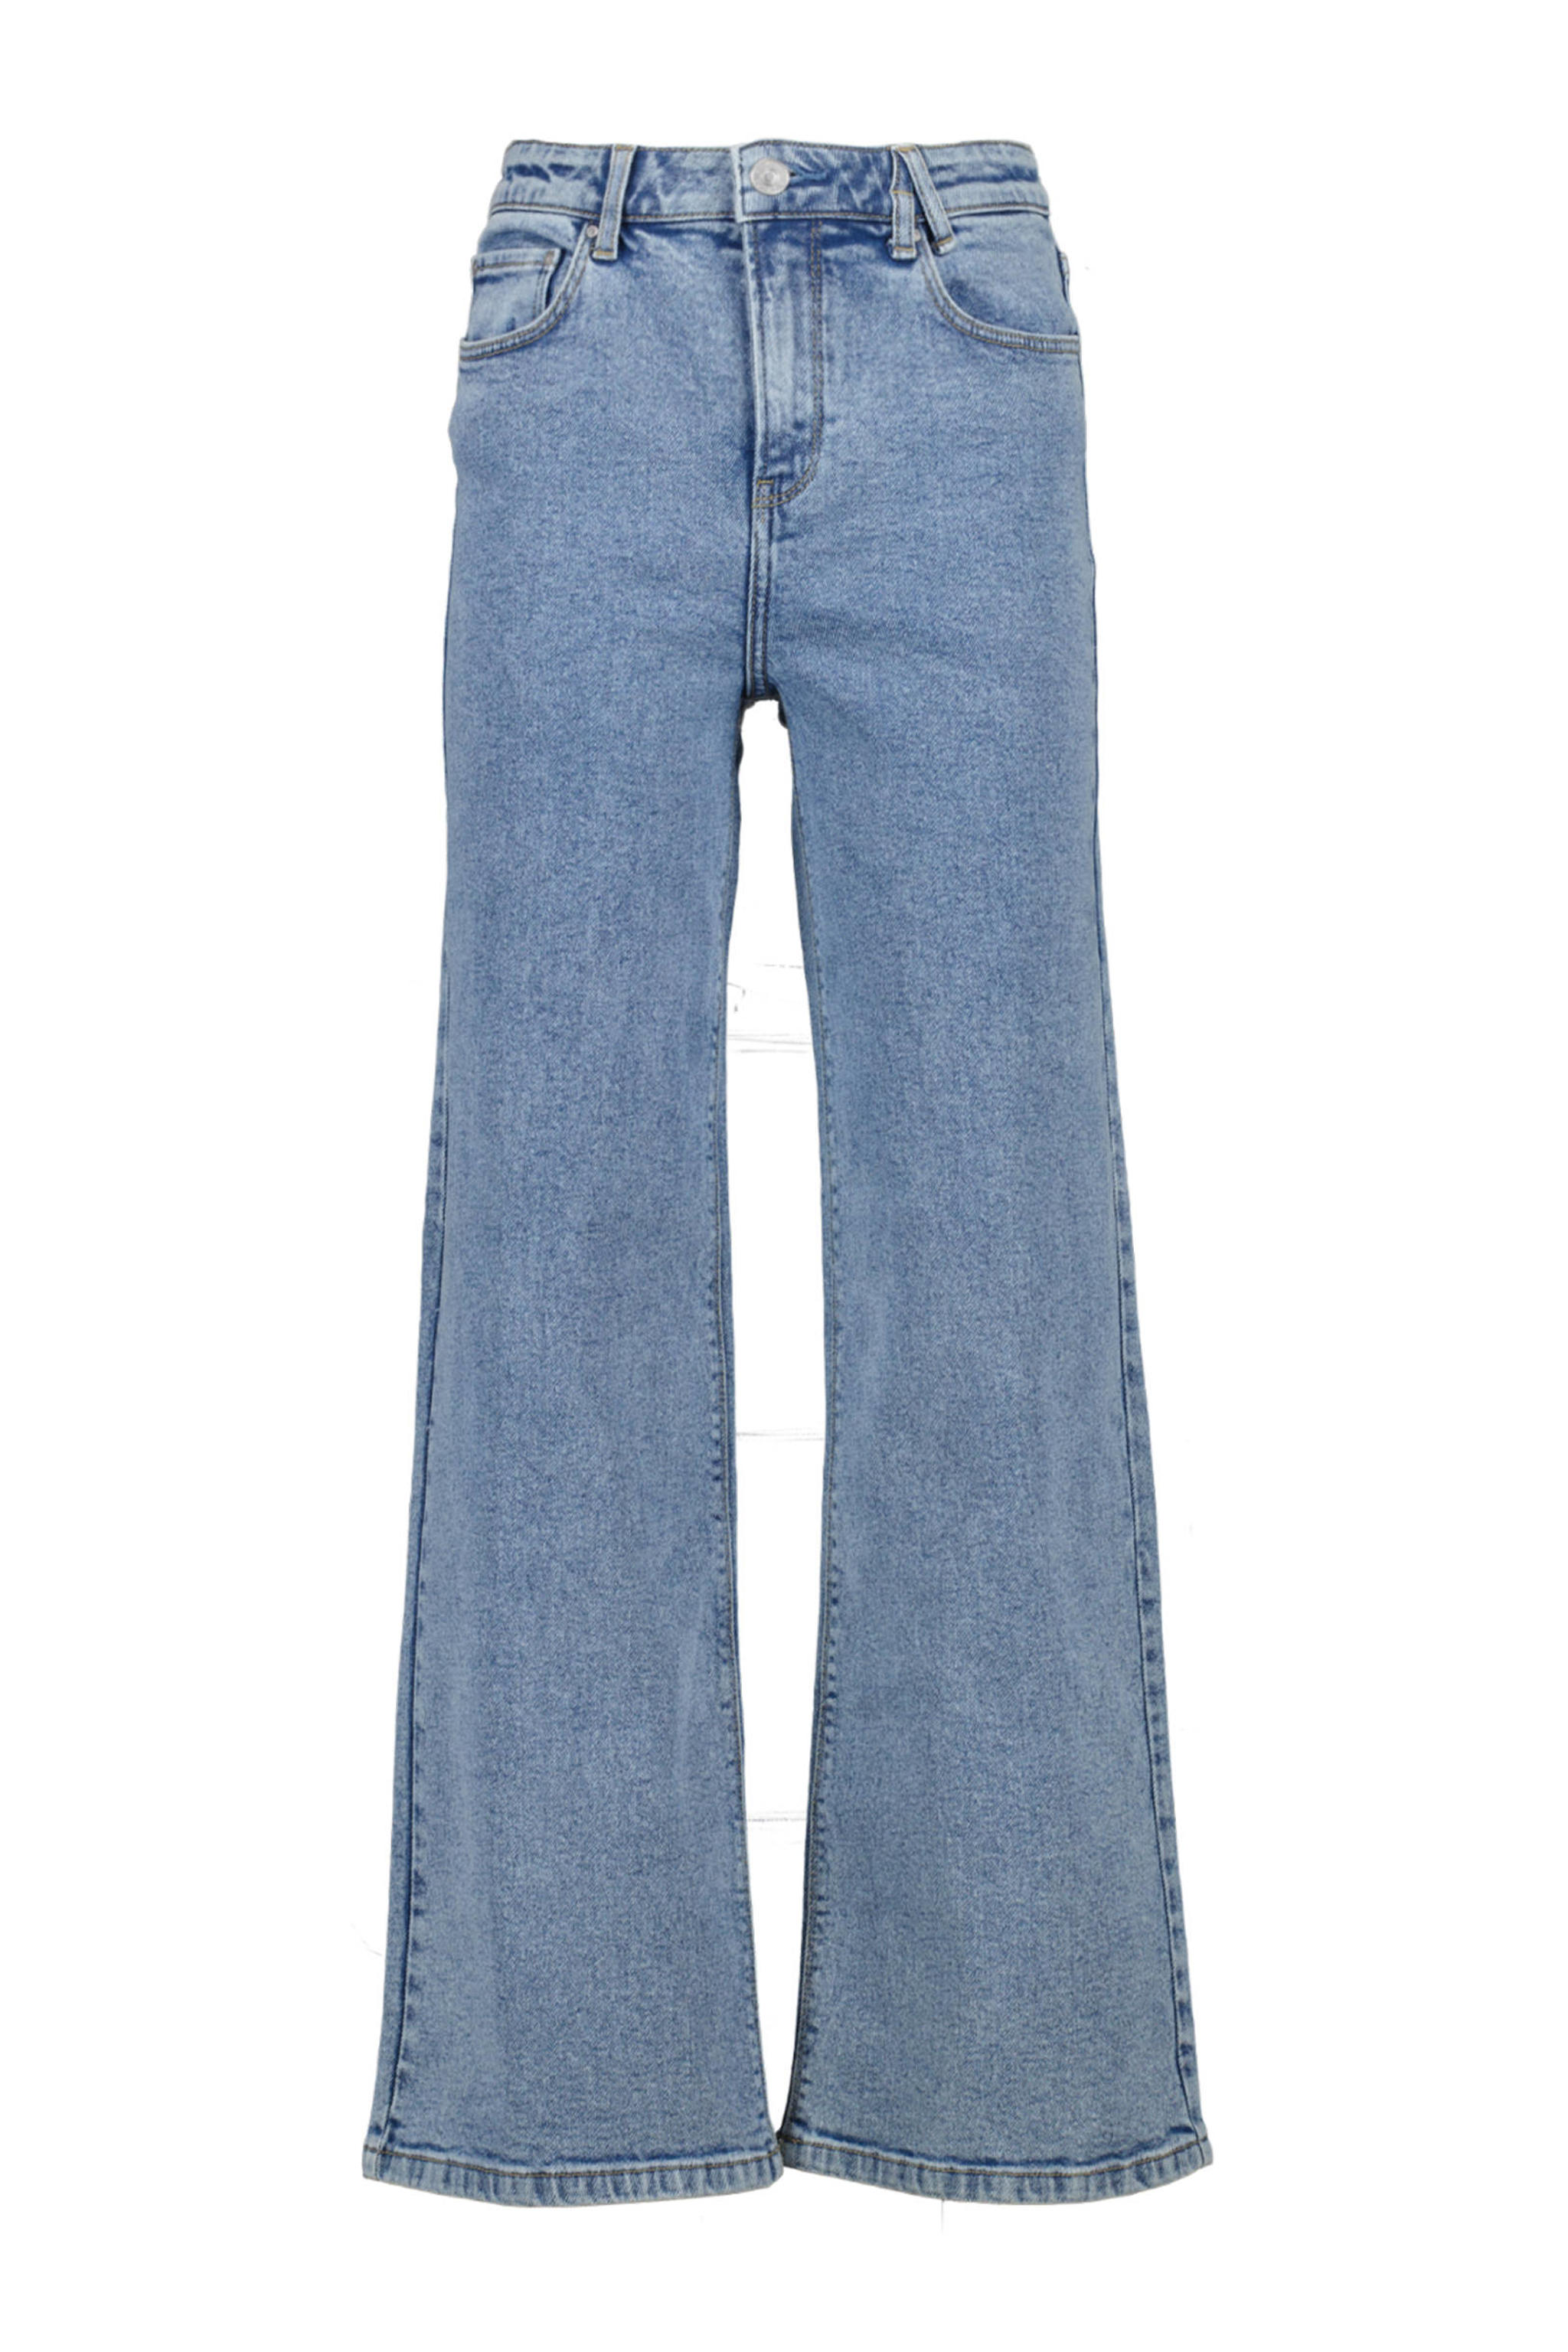 America Today wide leg jeans Olivia Jr light blue denim | wehkamp